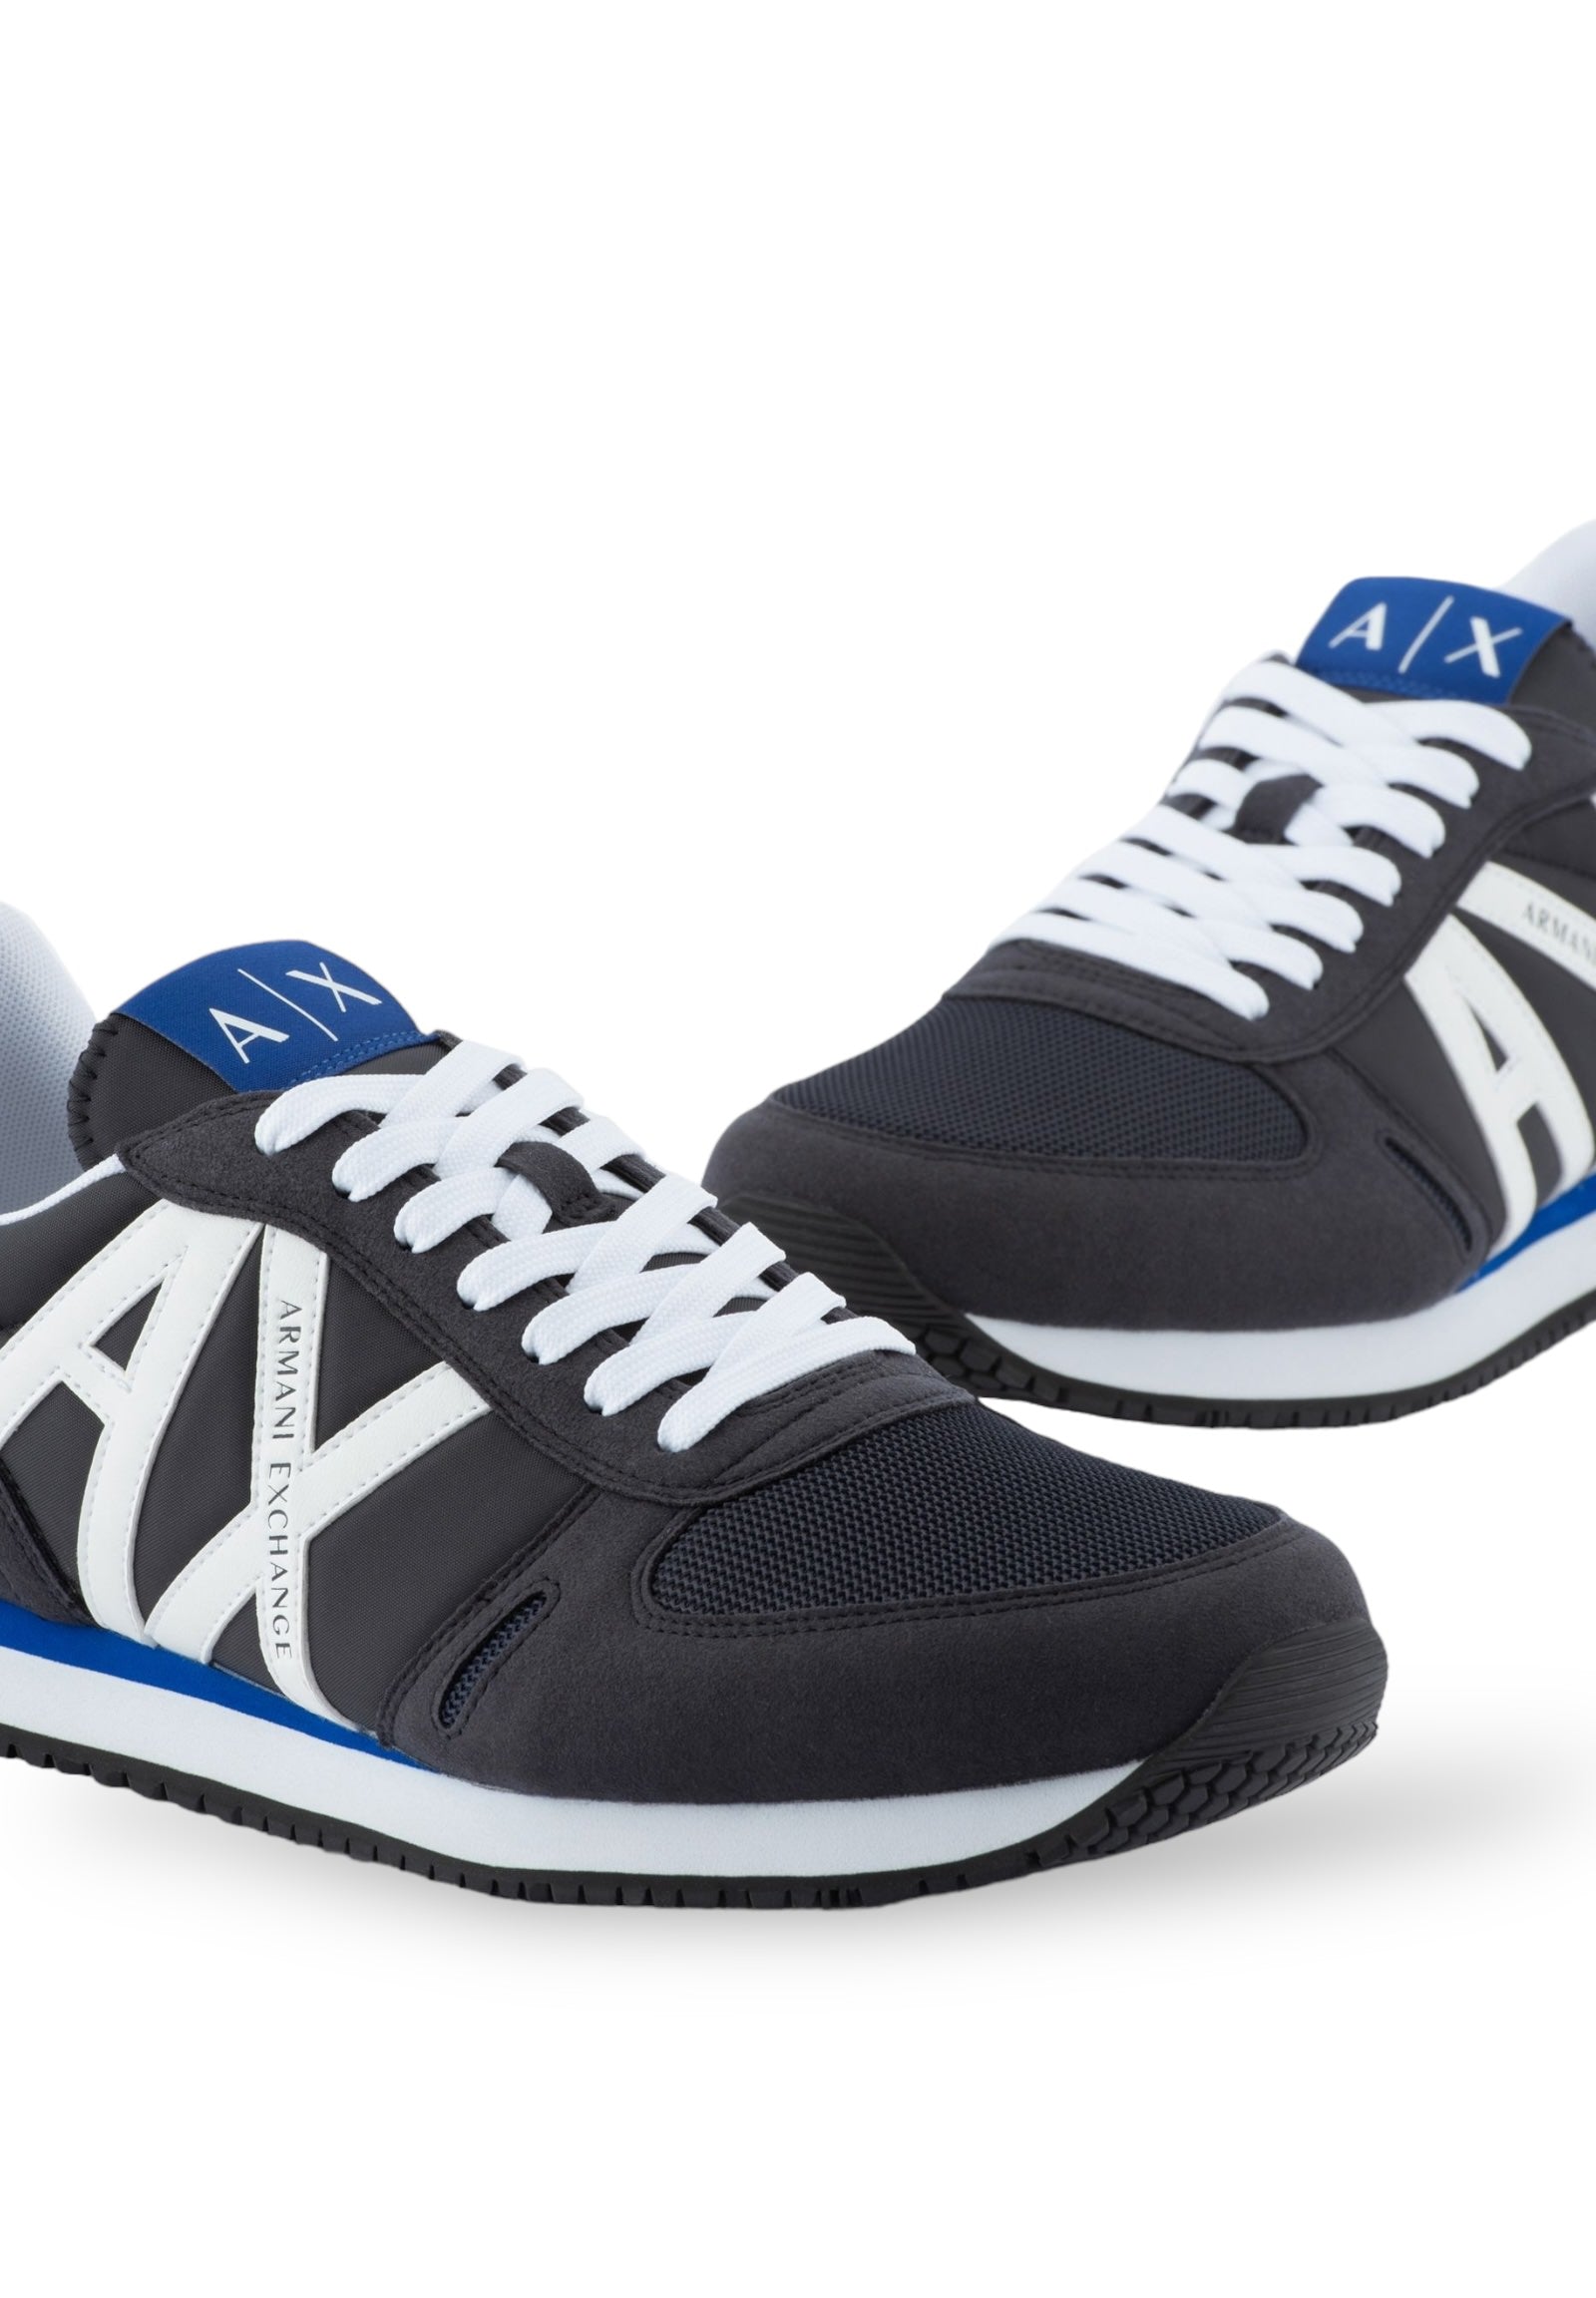 Sneakers Xux017 NavY-Optic White